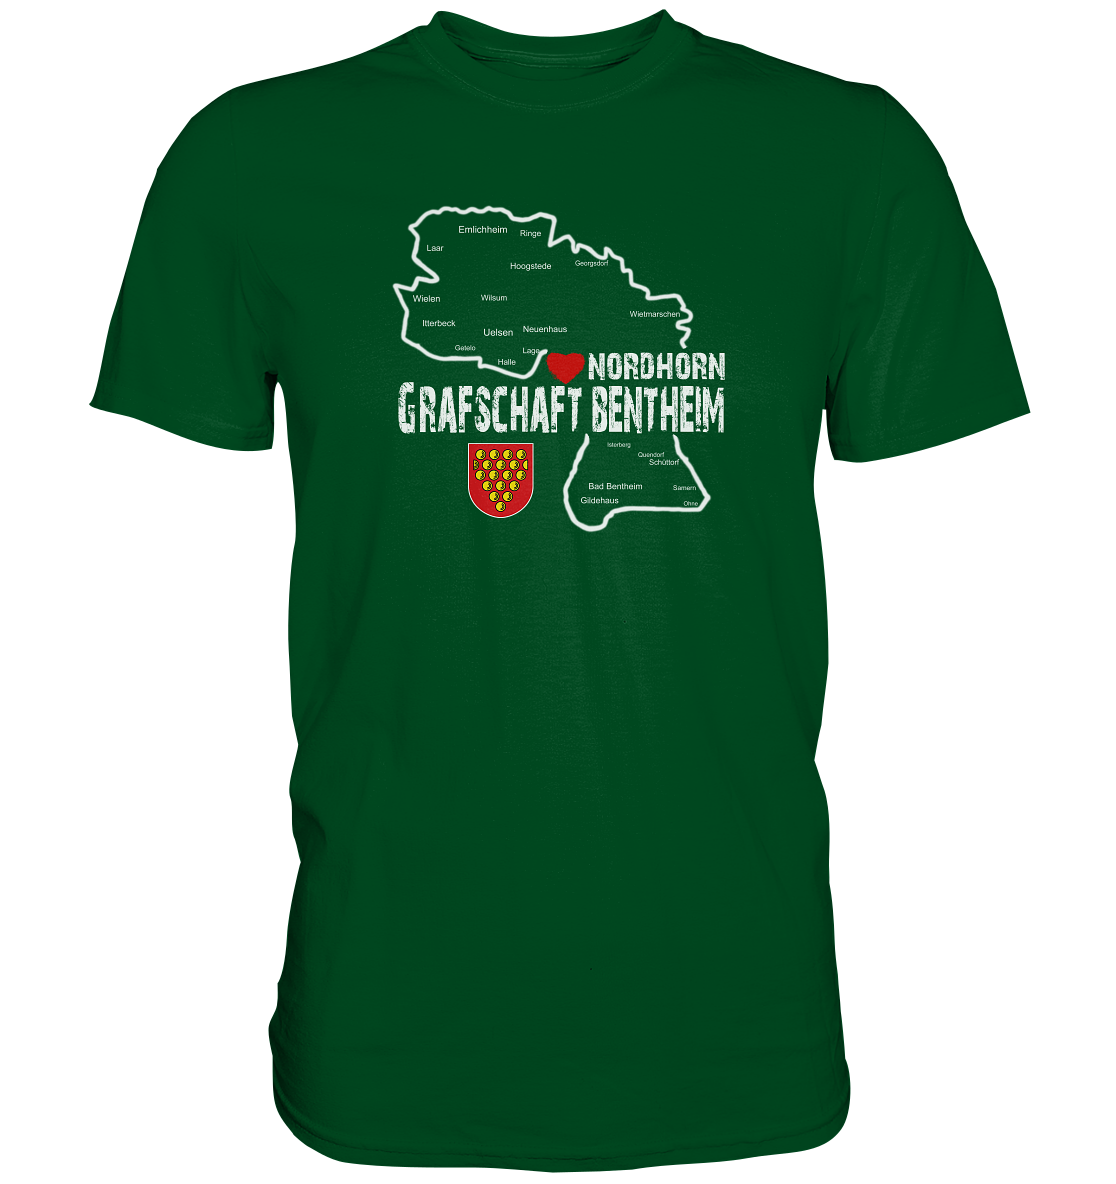 Hometown Shirt "Nordhorn" - Premium Shirt